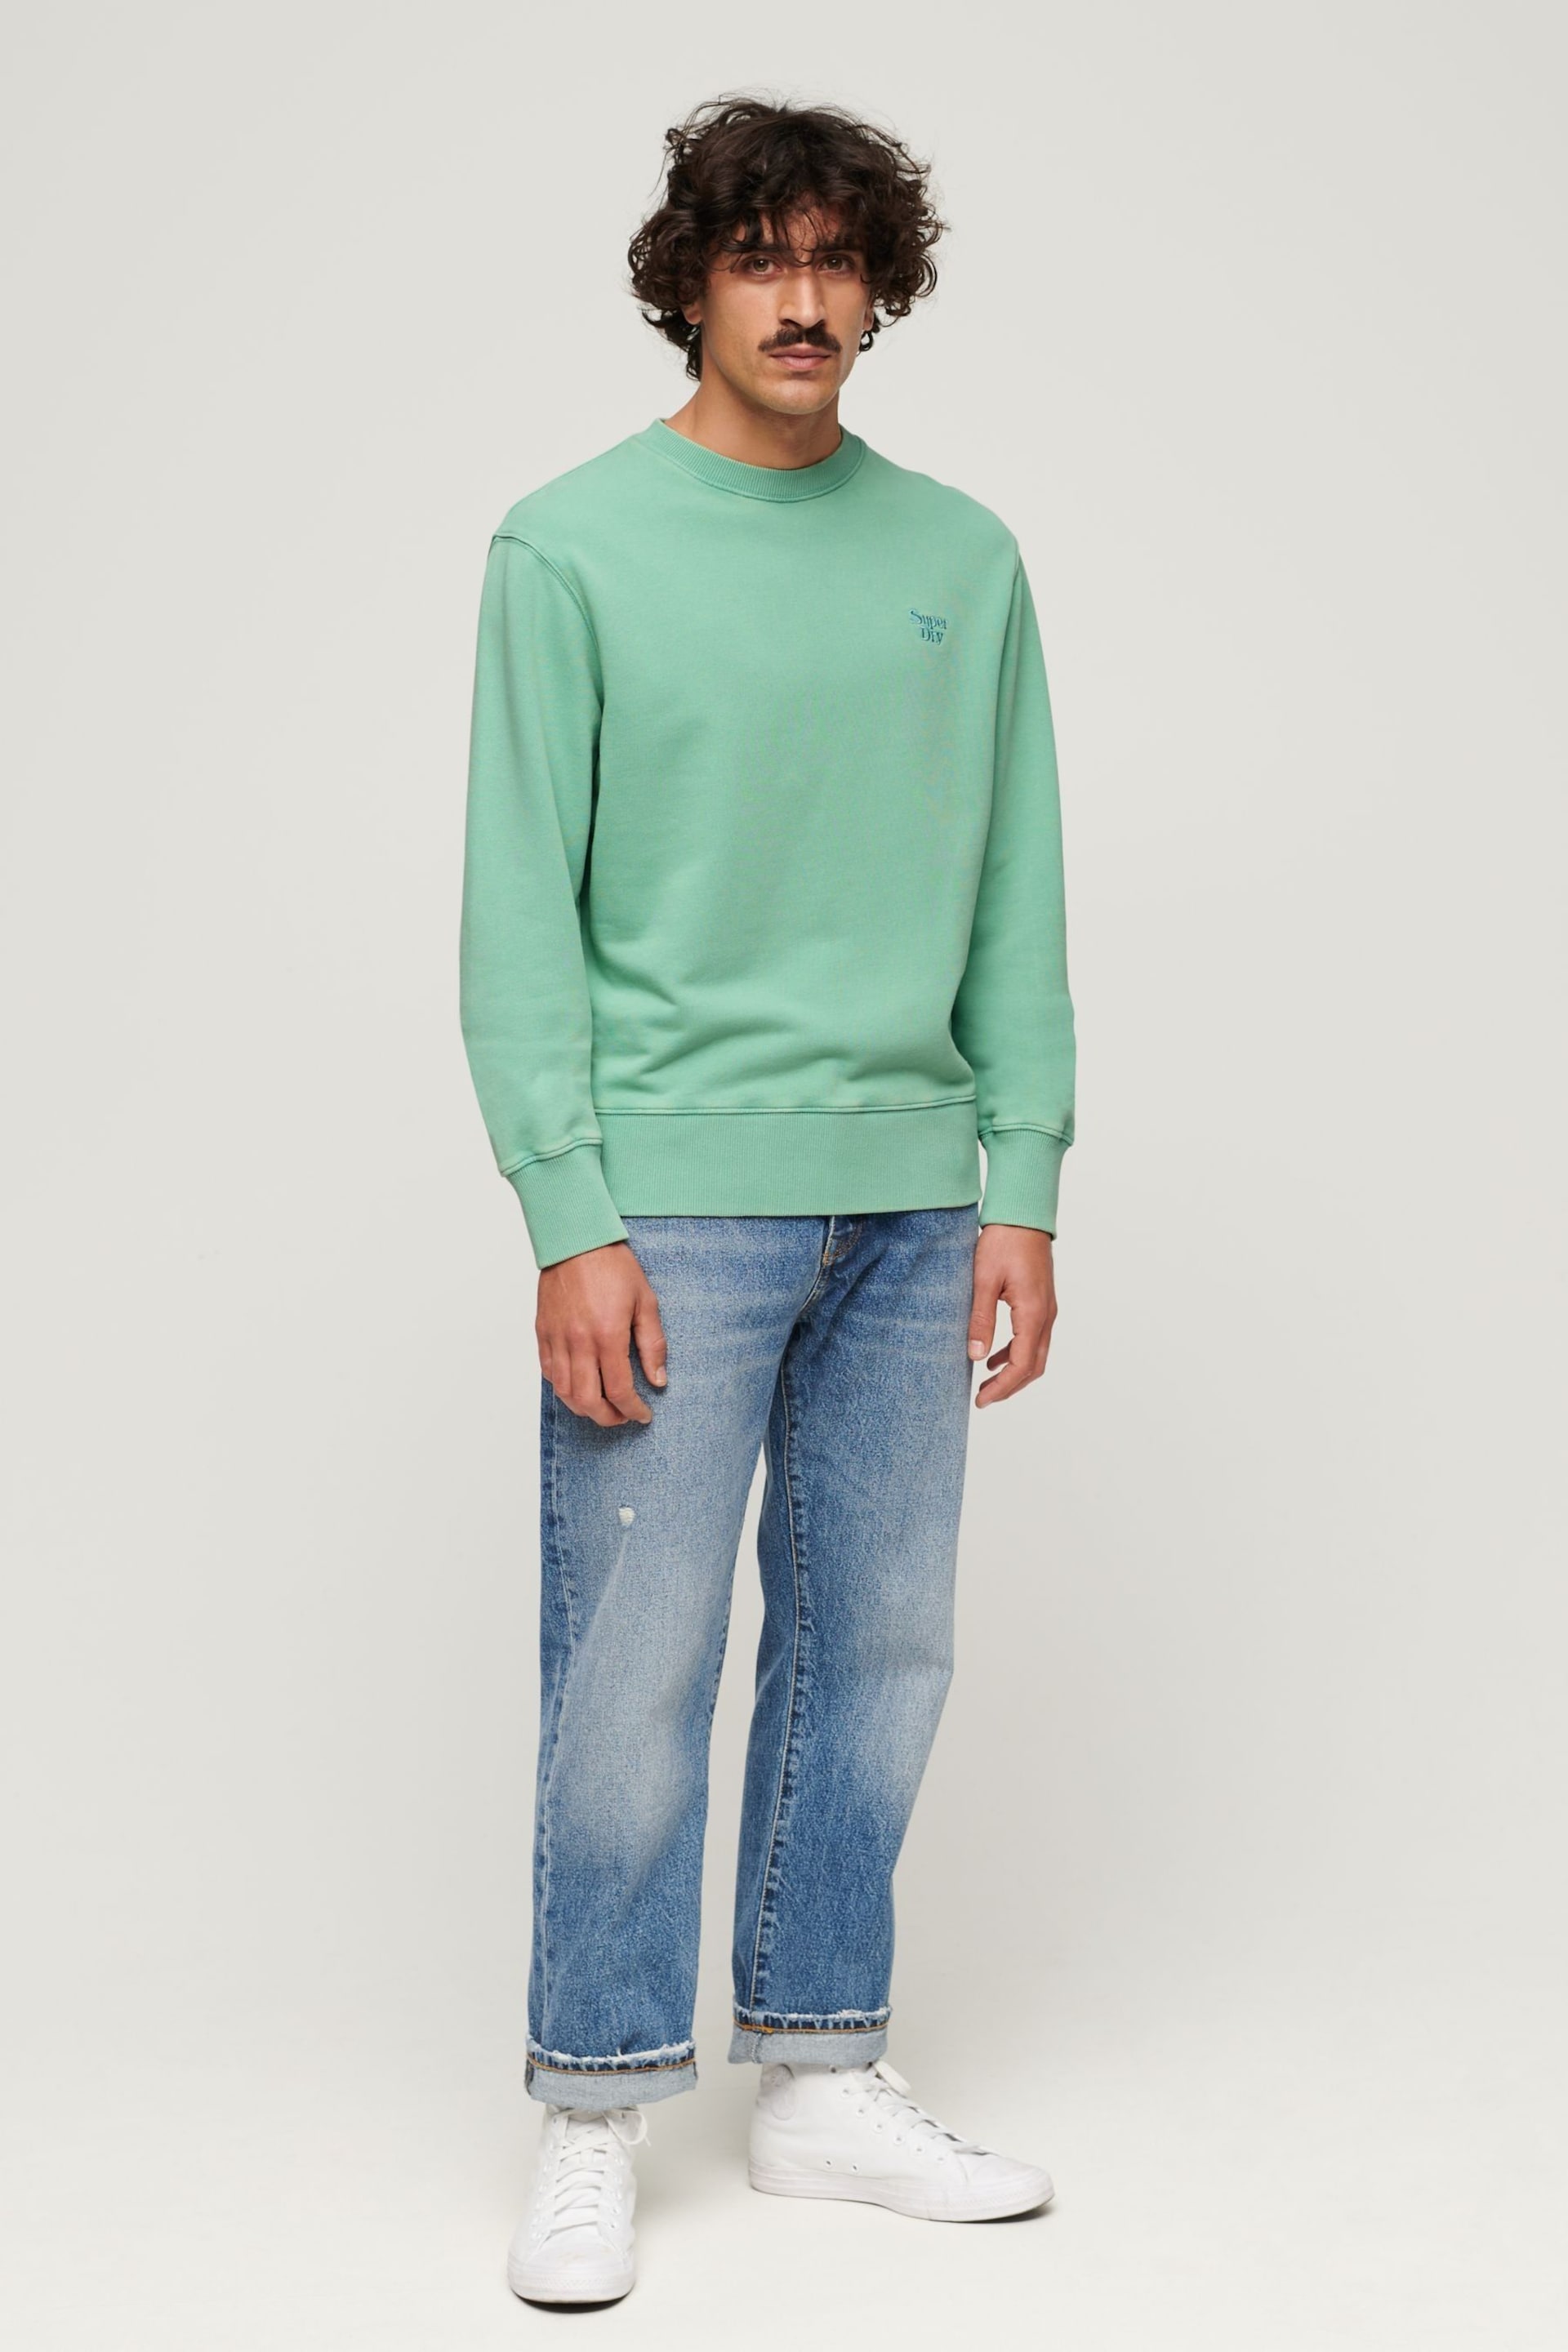 Superdry Green Vintage Washed Sweatshirt - Image 2 of 6